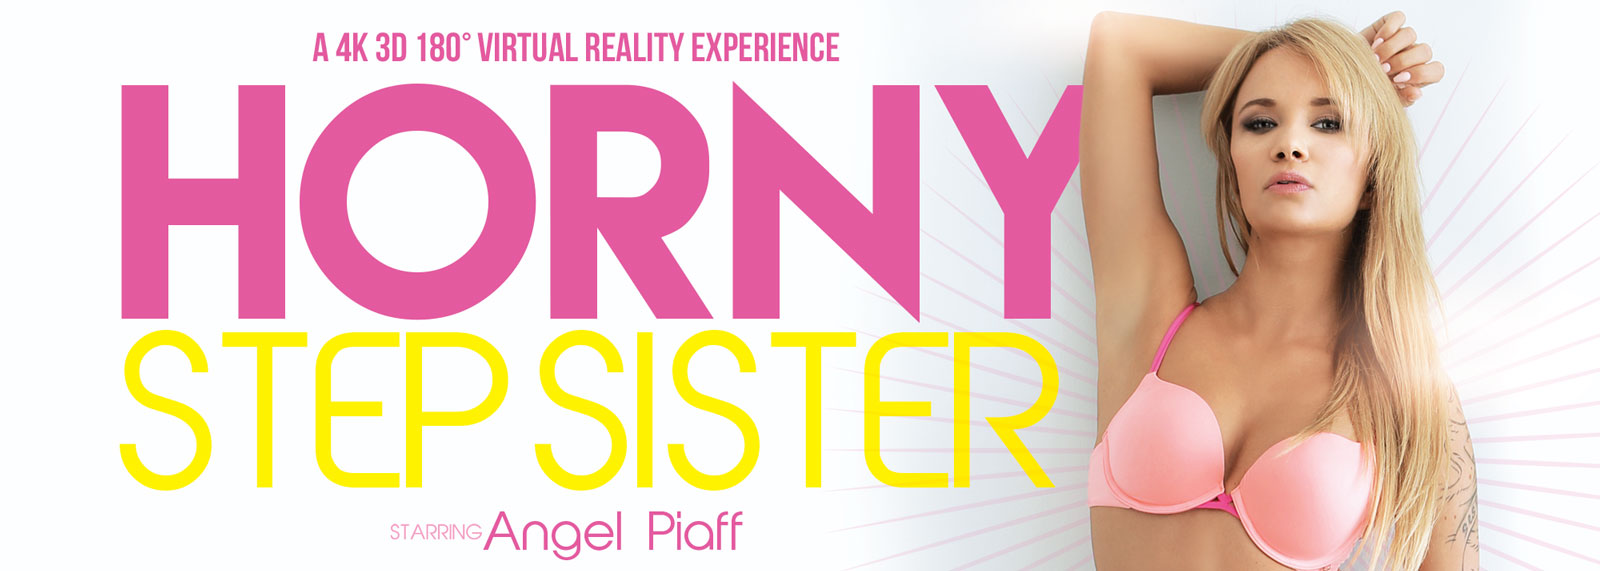 Horny Step Sister - VR Porn Video, Starring: Angel Piaff